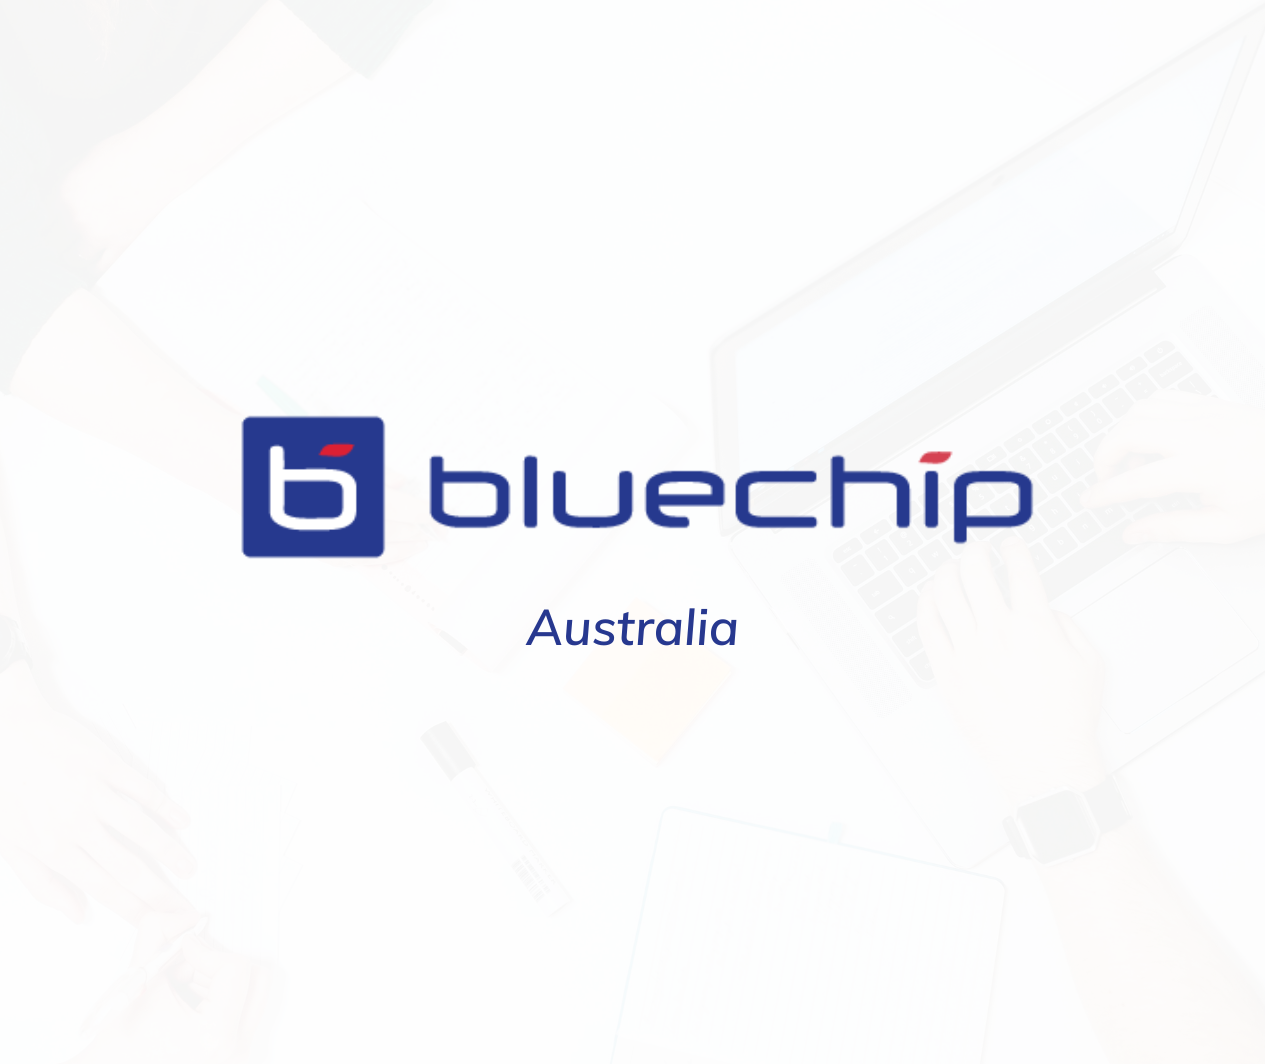 Bluechip Australia